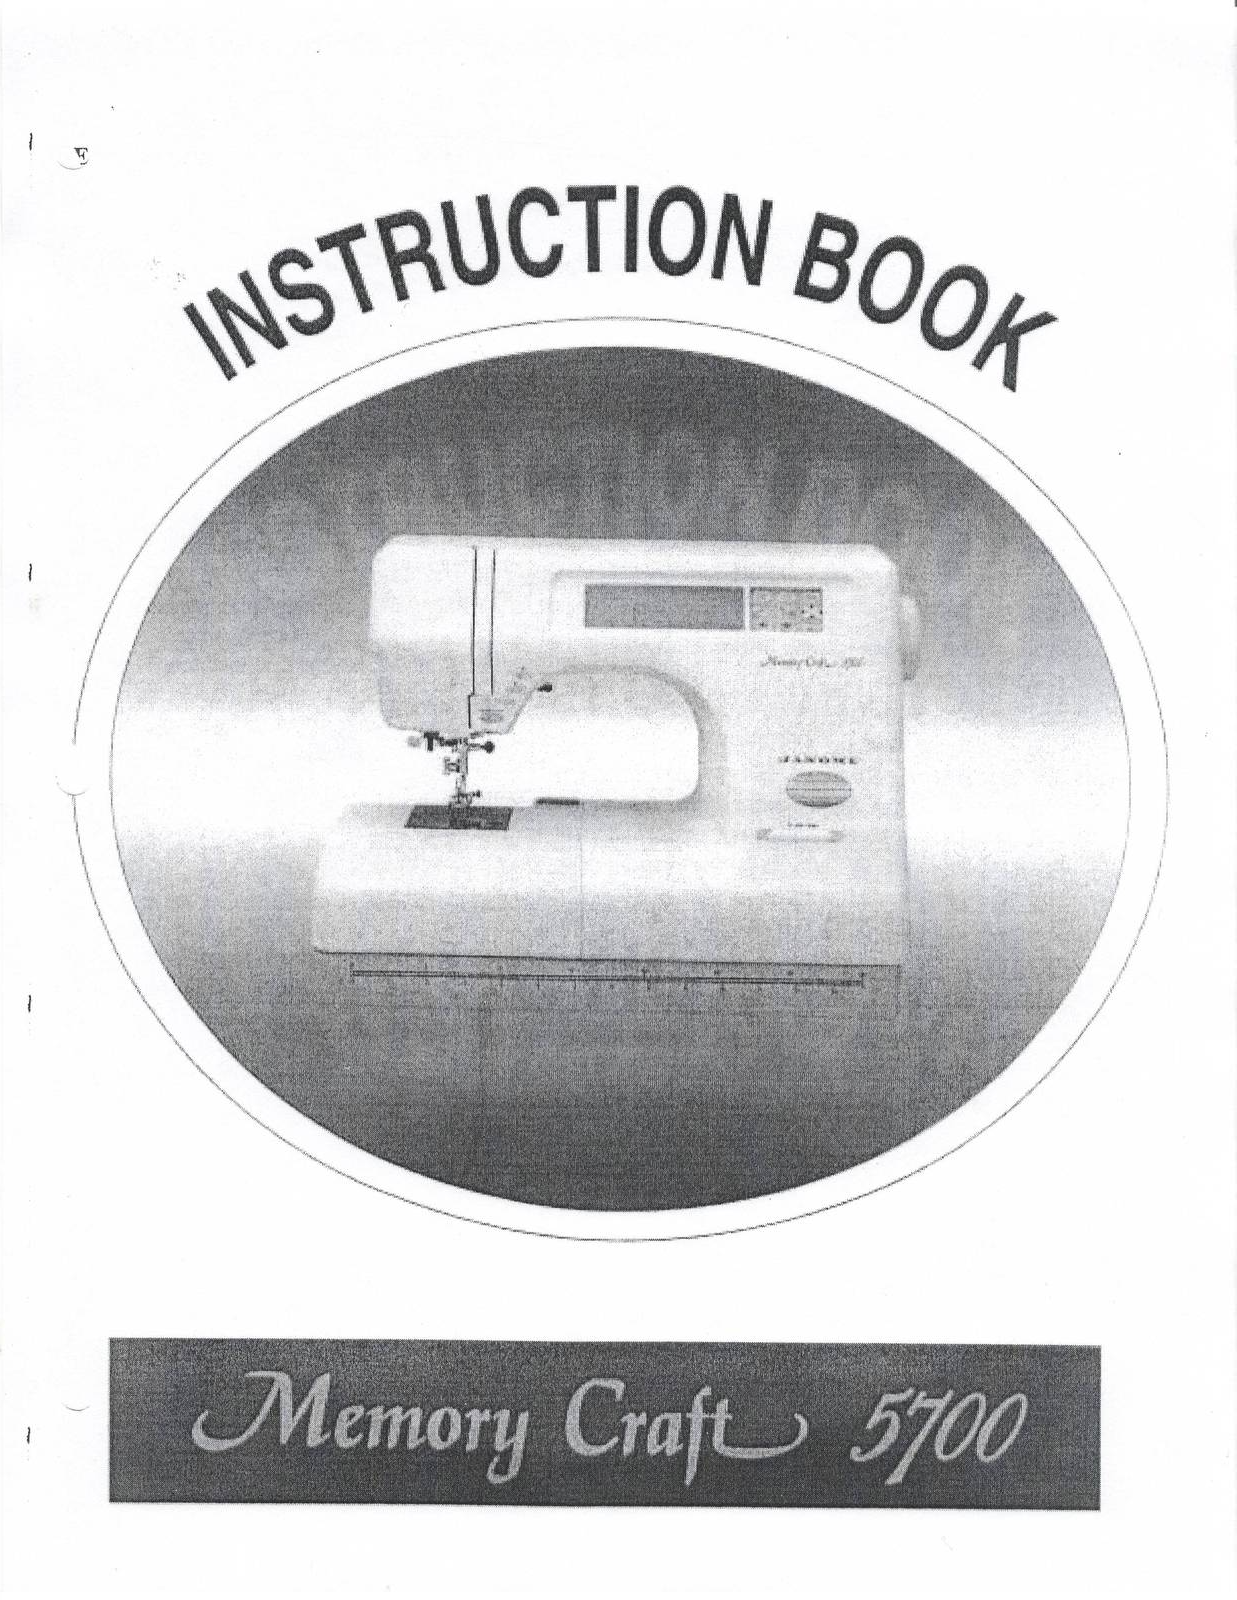 Memory Craft 5700 manual for Sewing Machine Hard Copy - $12.99